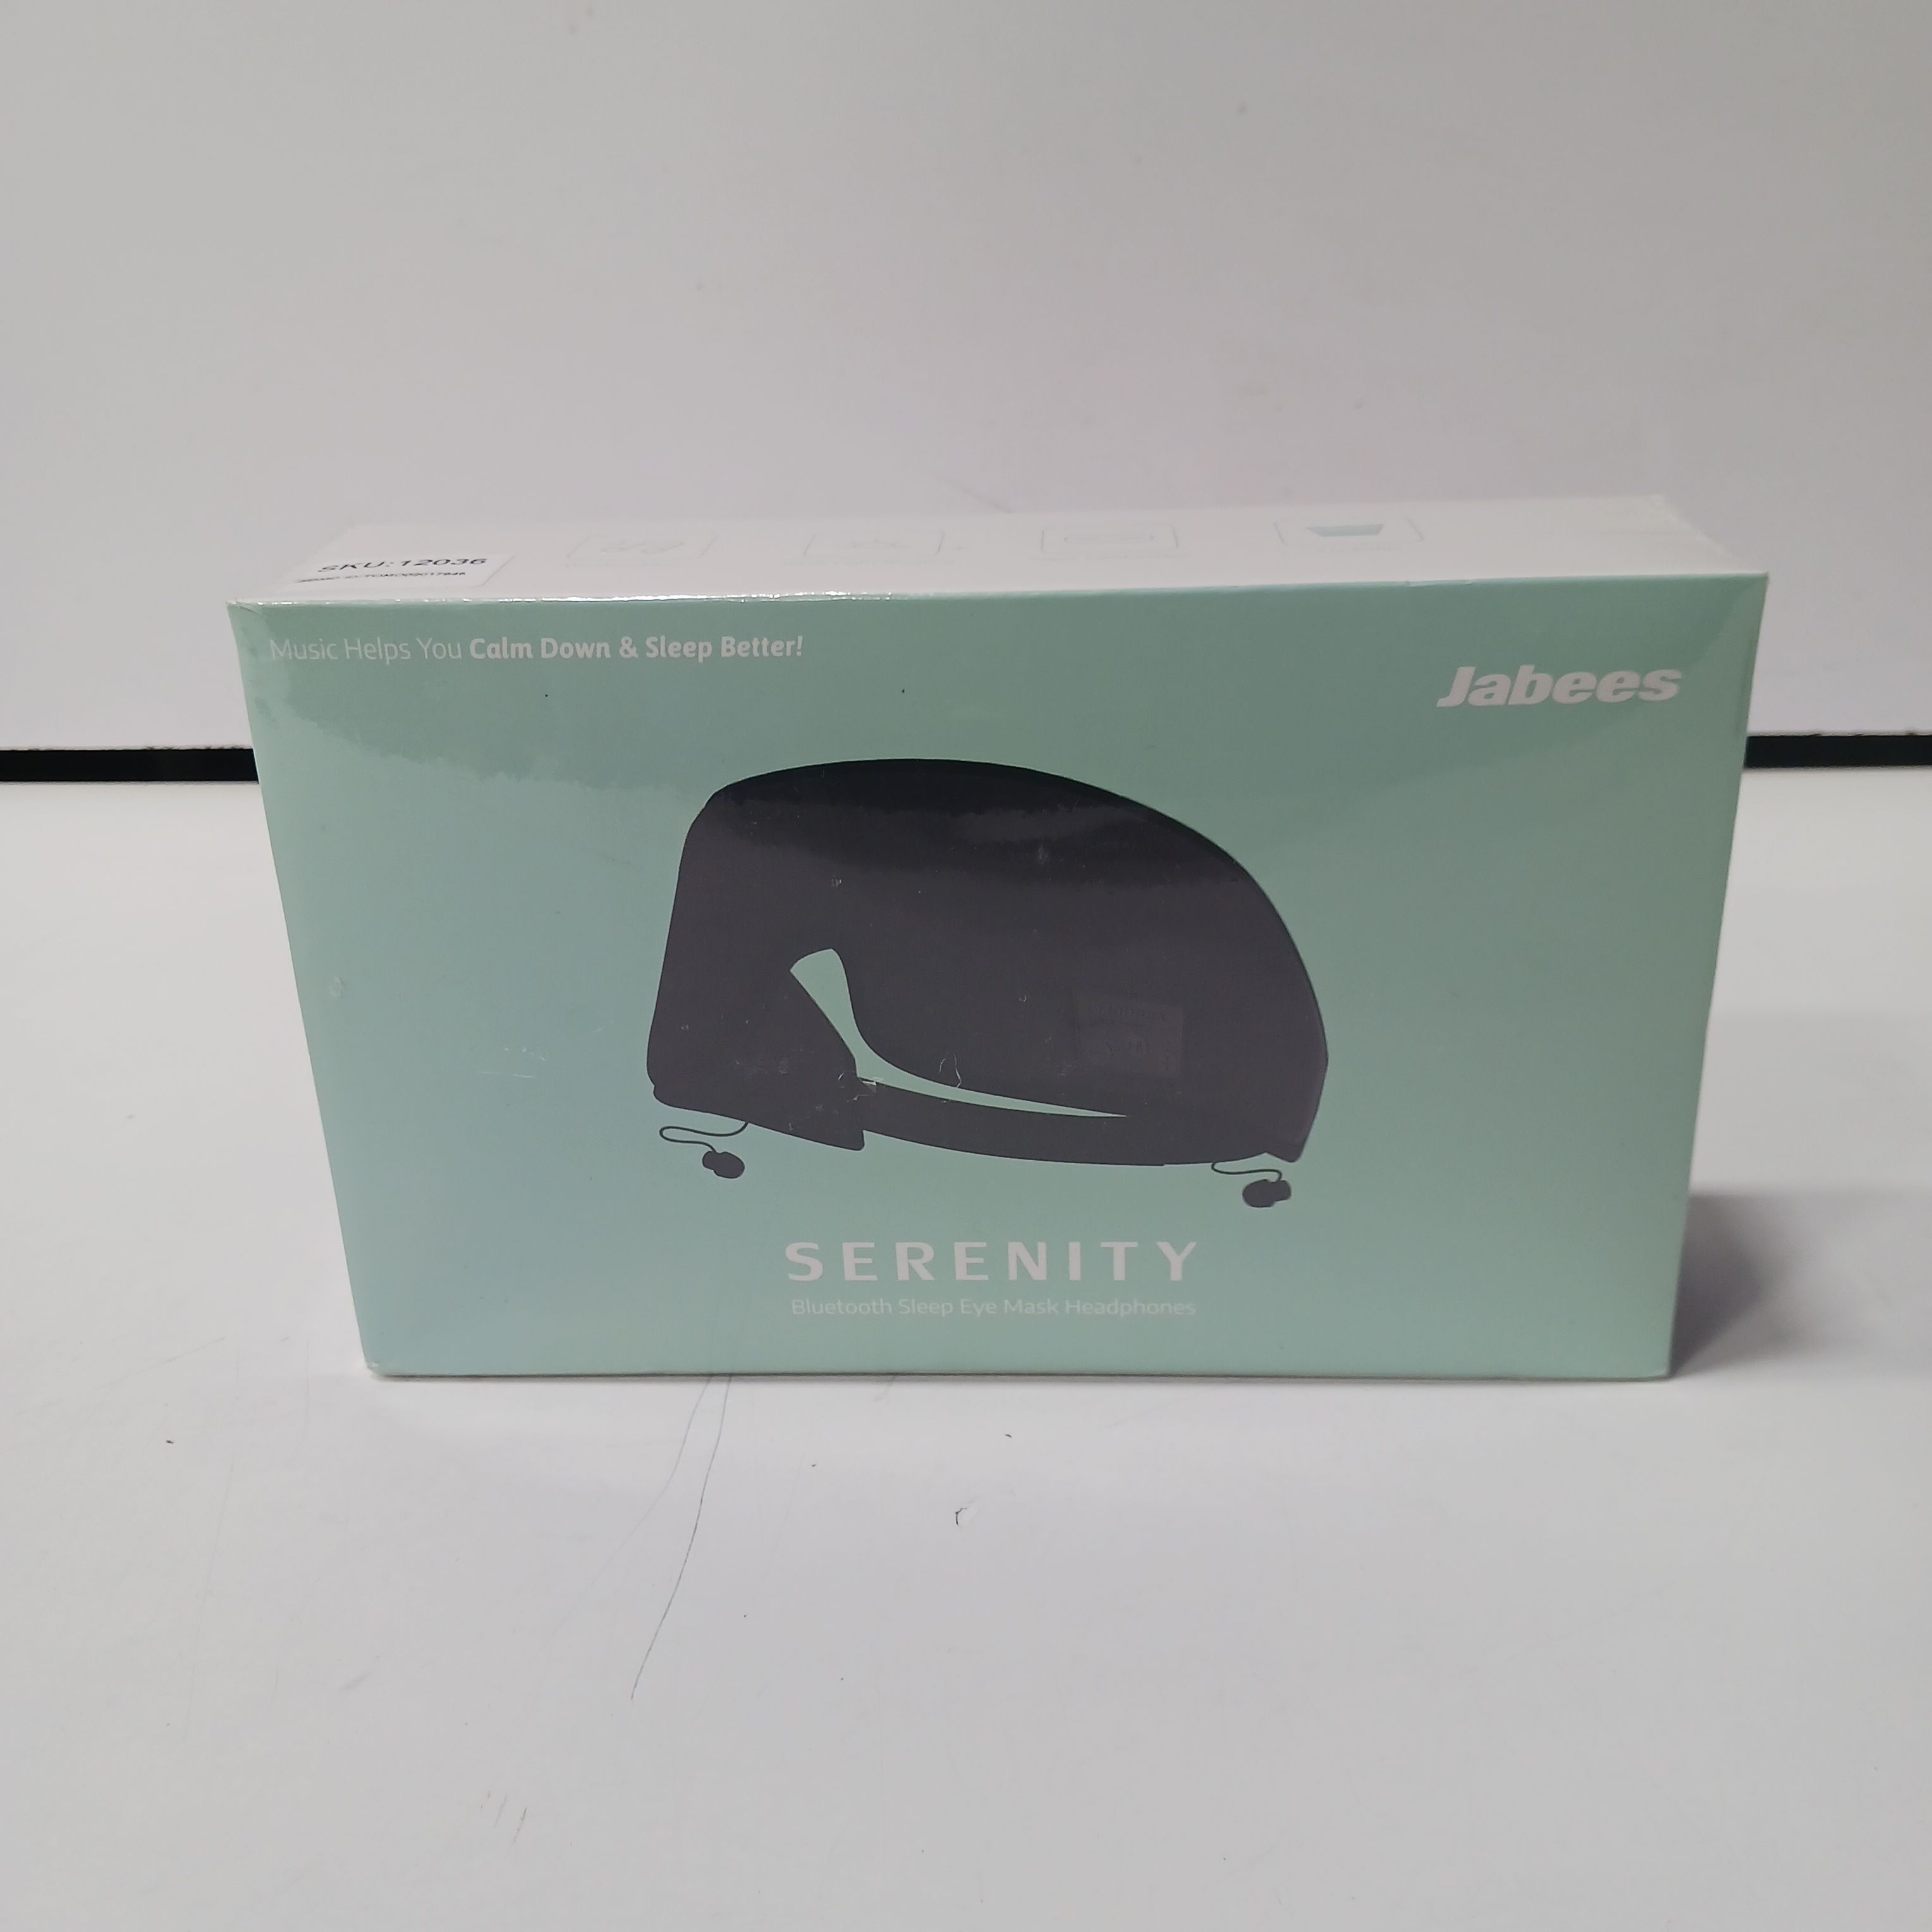 Buy the Jabees Serenity Bluetooth Sleep Eye Mask Headphones NEW